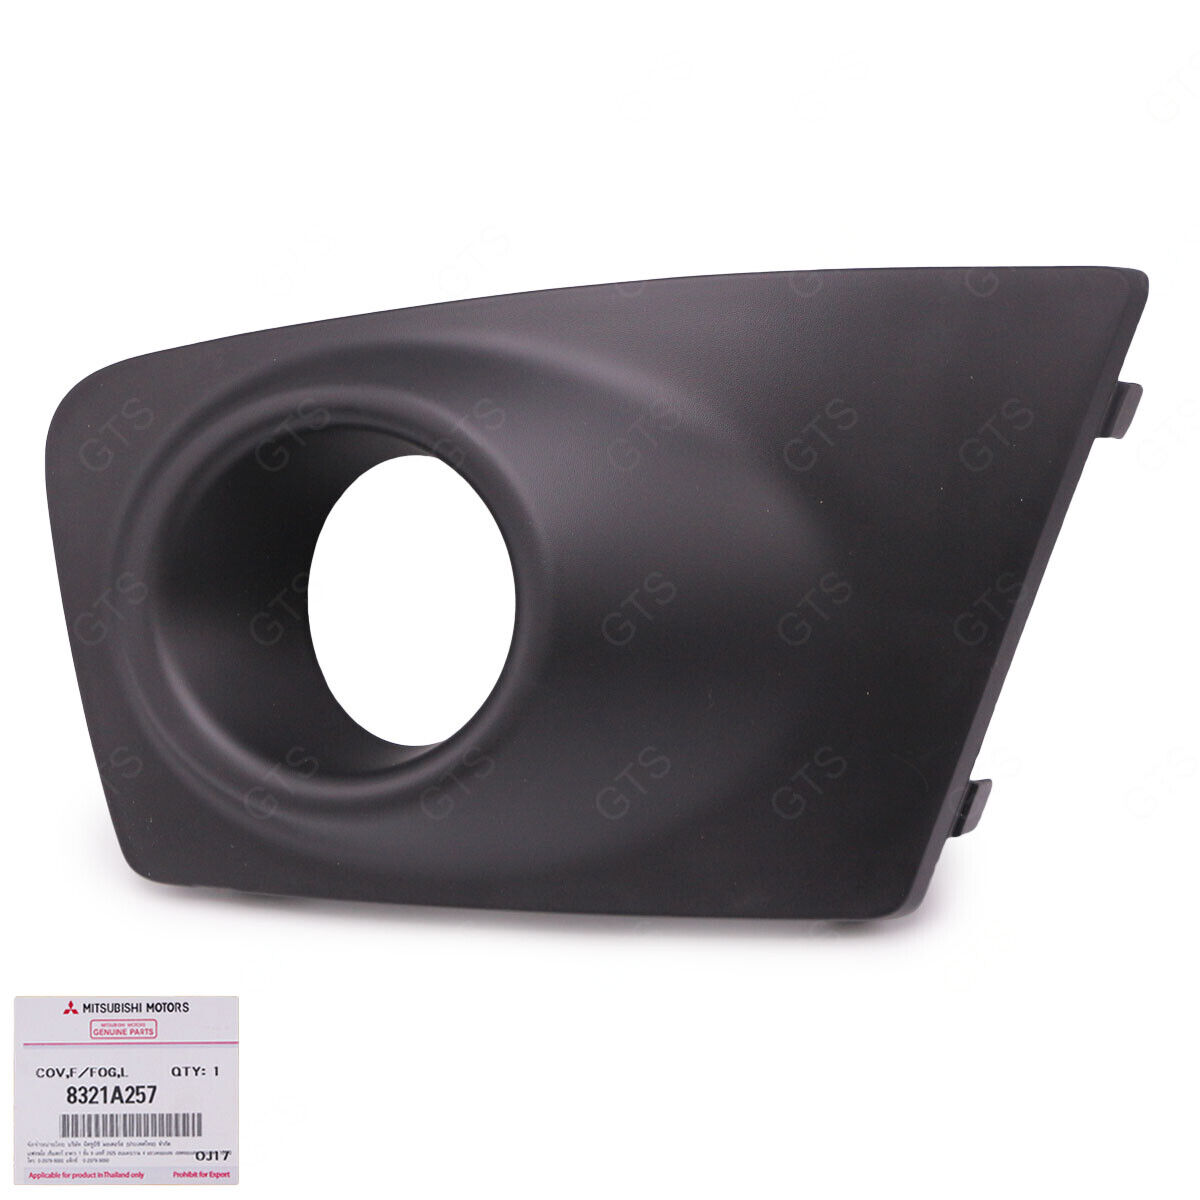 Lh Black Plastic Fog Lamp Spot Light Cover For Mitsubishi L200 Triton 2009 2013